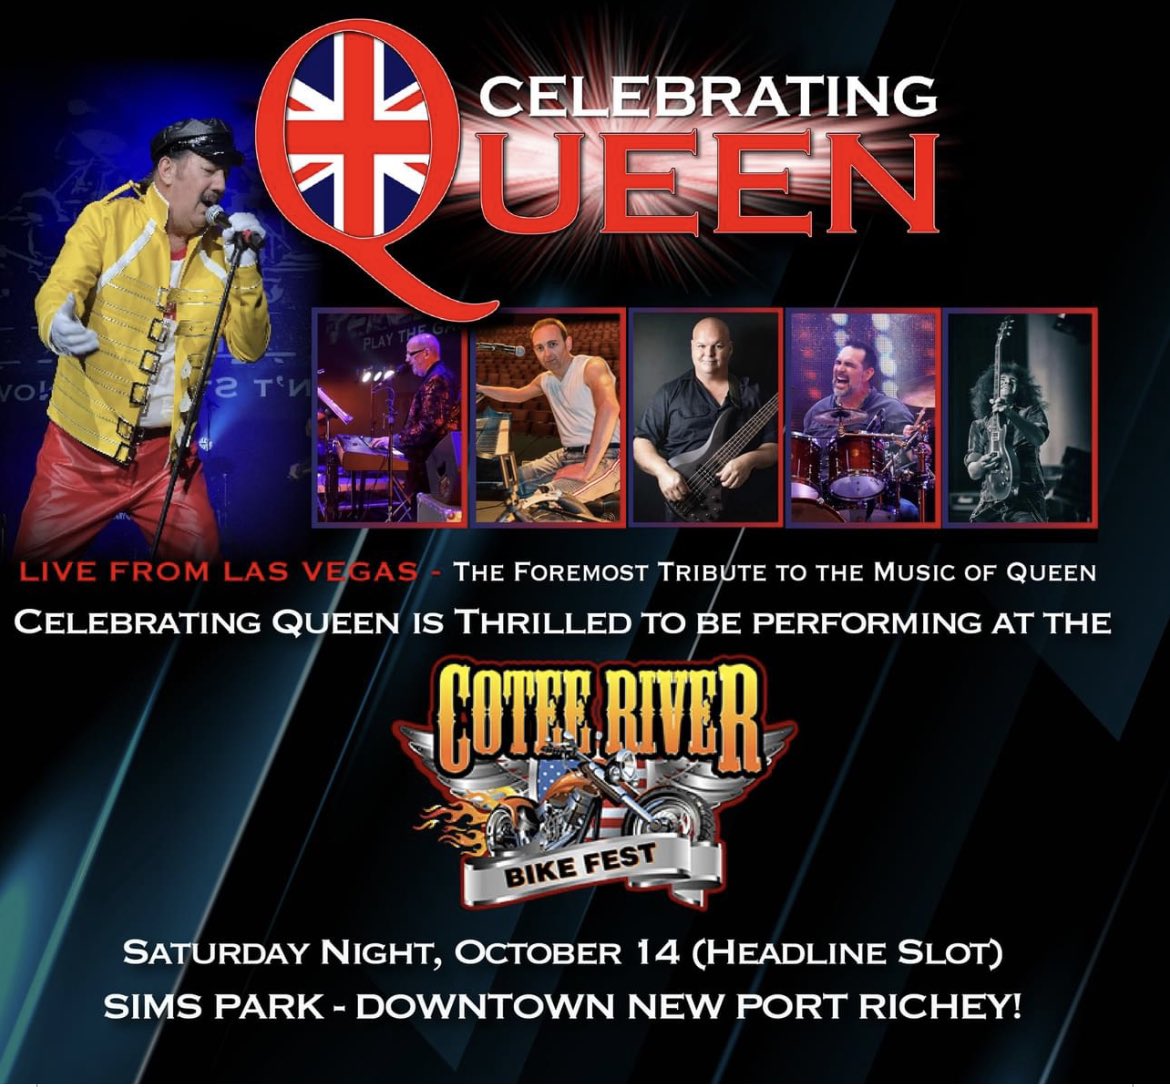 We are coming to New Port Richie Florida in October! CelebratingQueen.com #queen